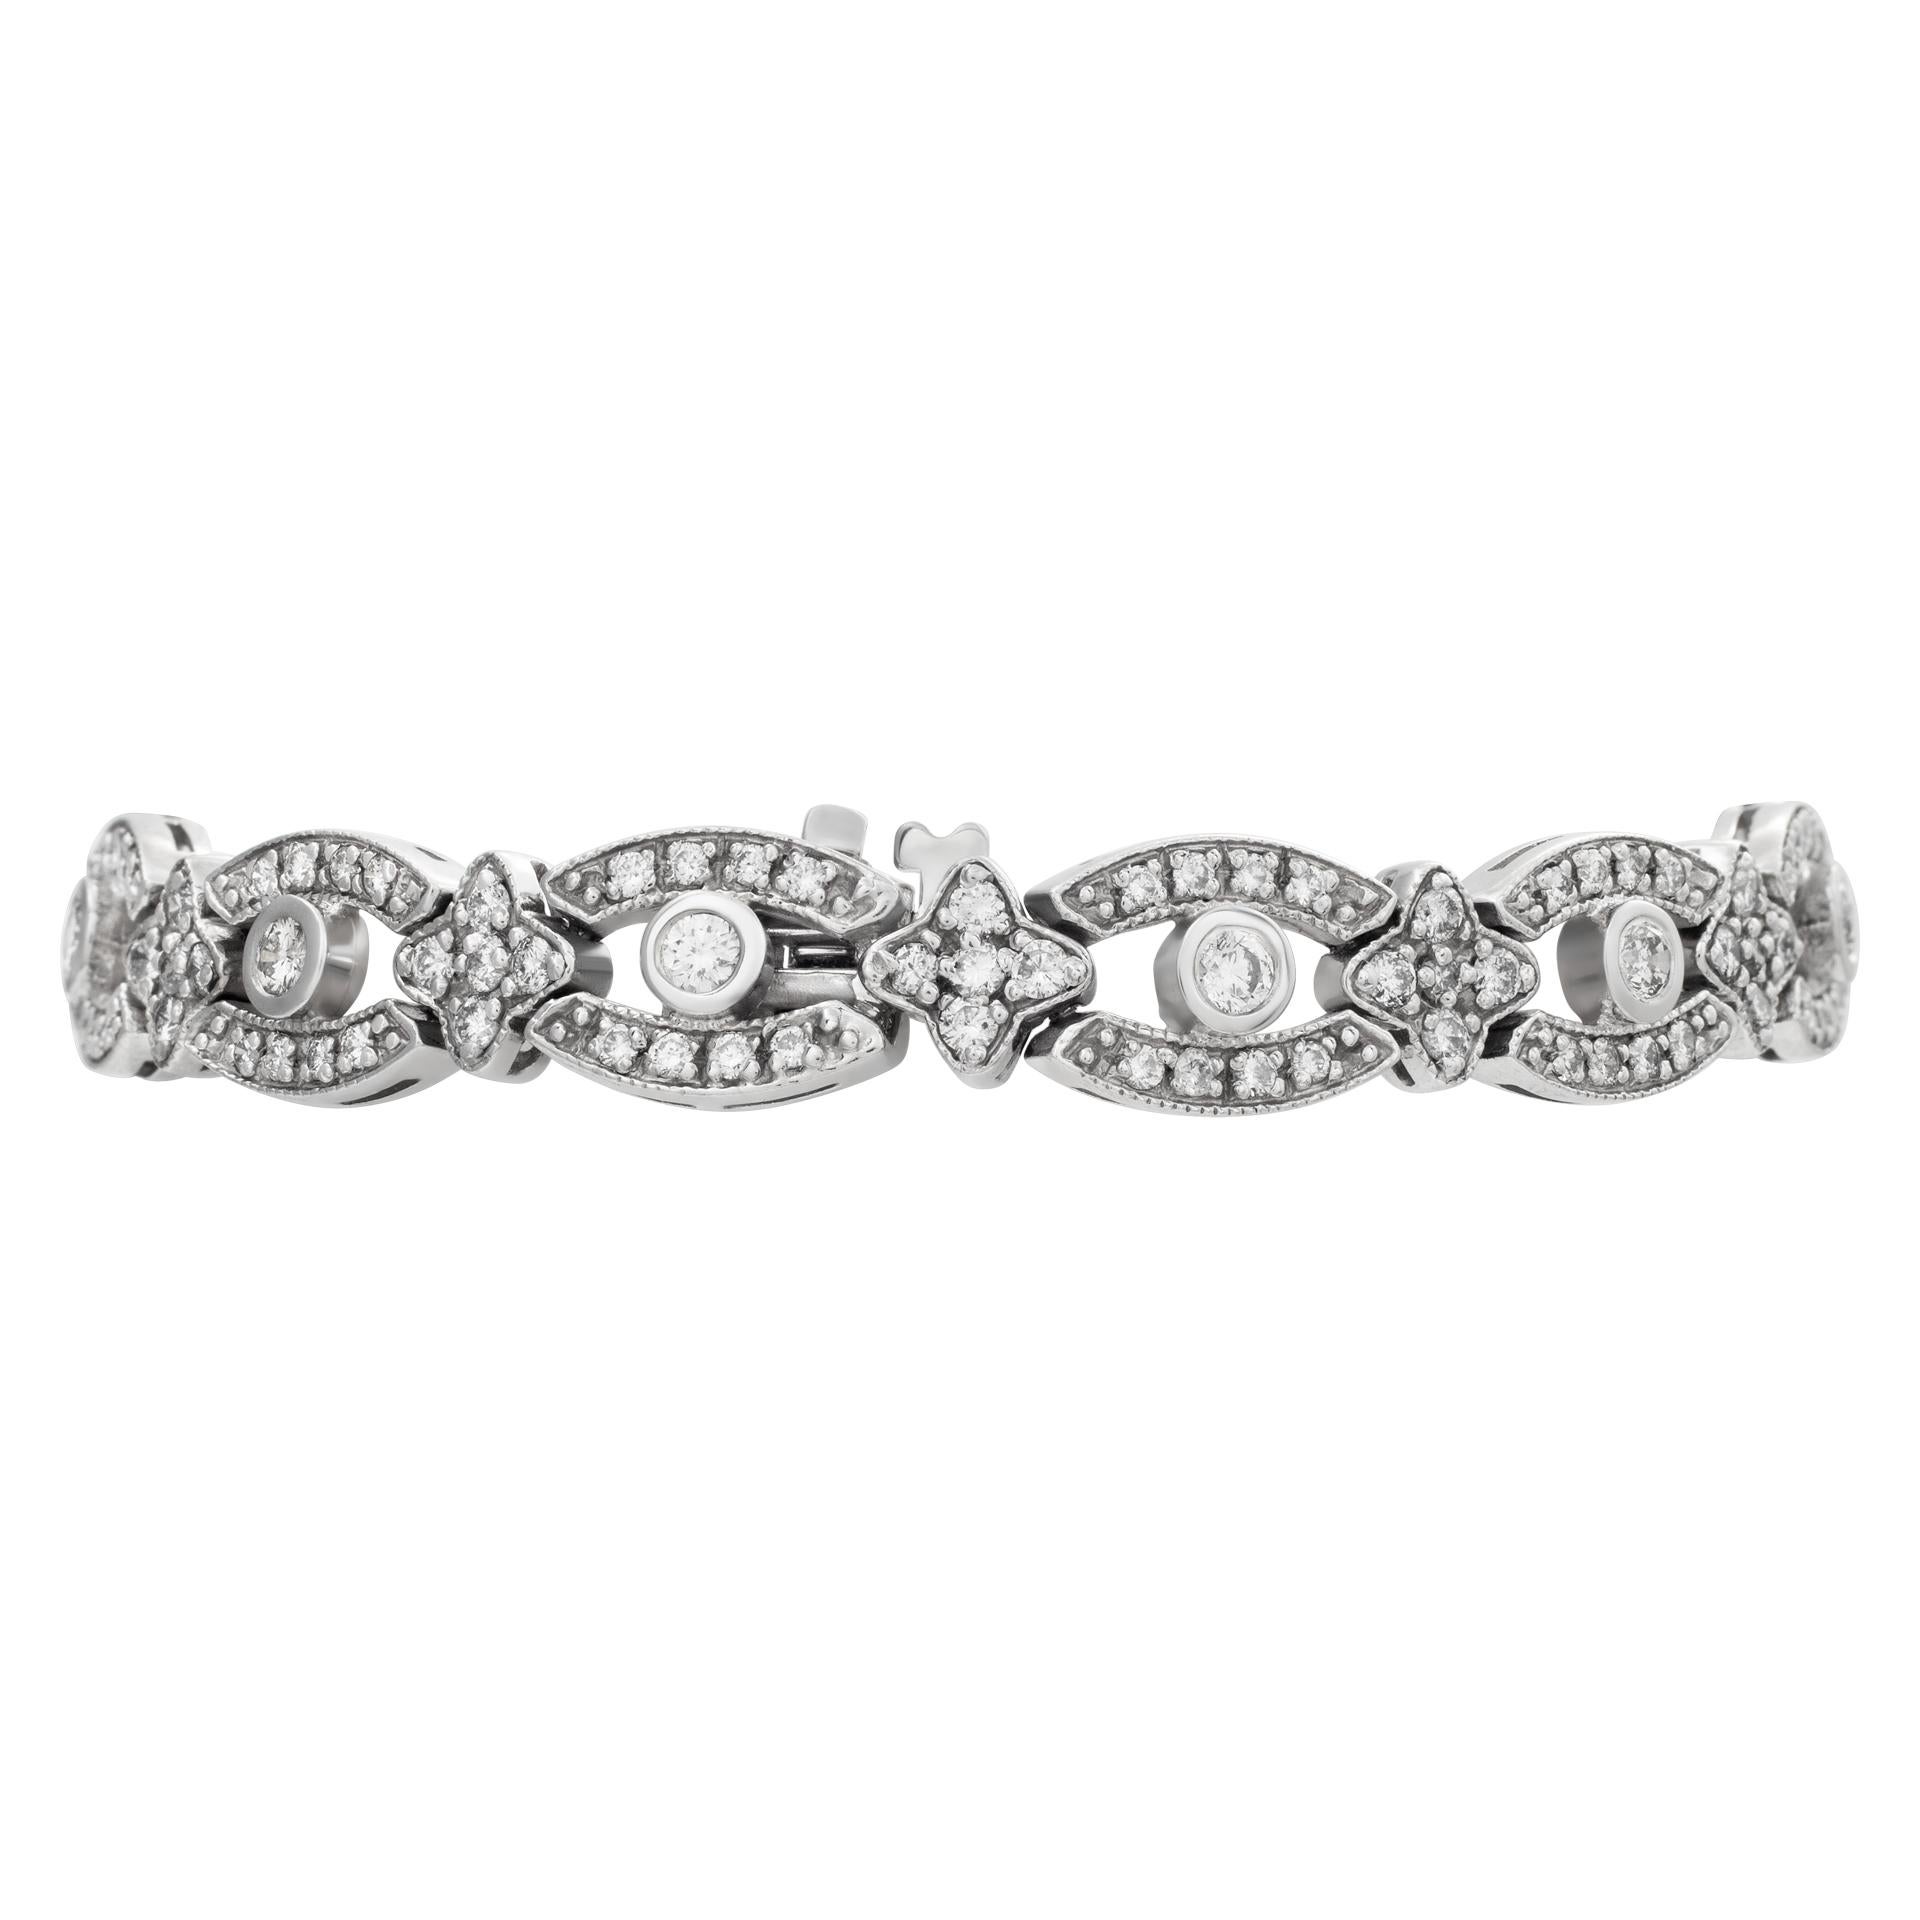 Diamonds Line Bracelet Set in 14K White Gold, Round Brilliant Cut Diamonds In Excellent Condition For Sale In Surfside, FL